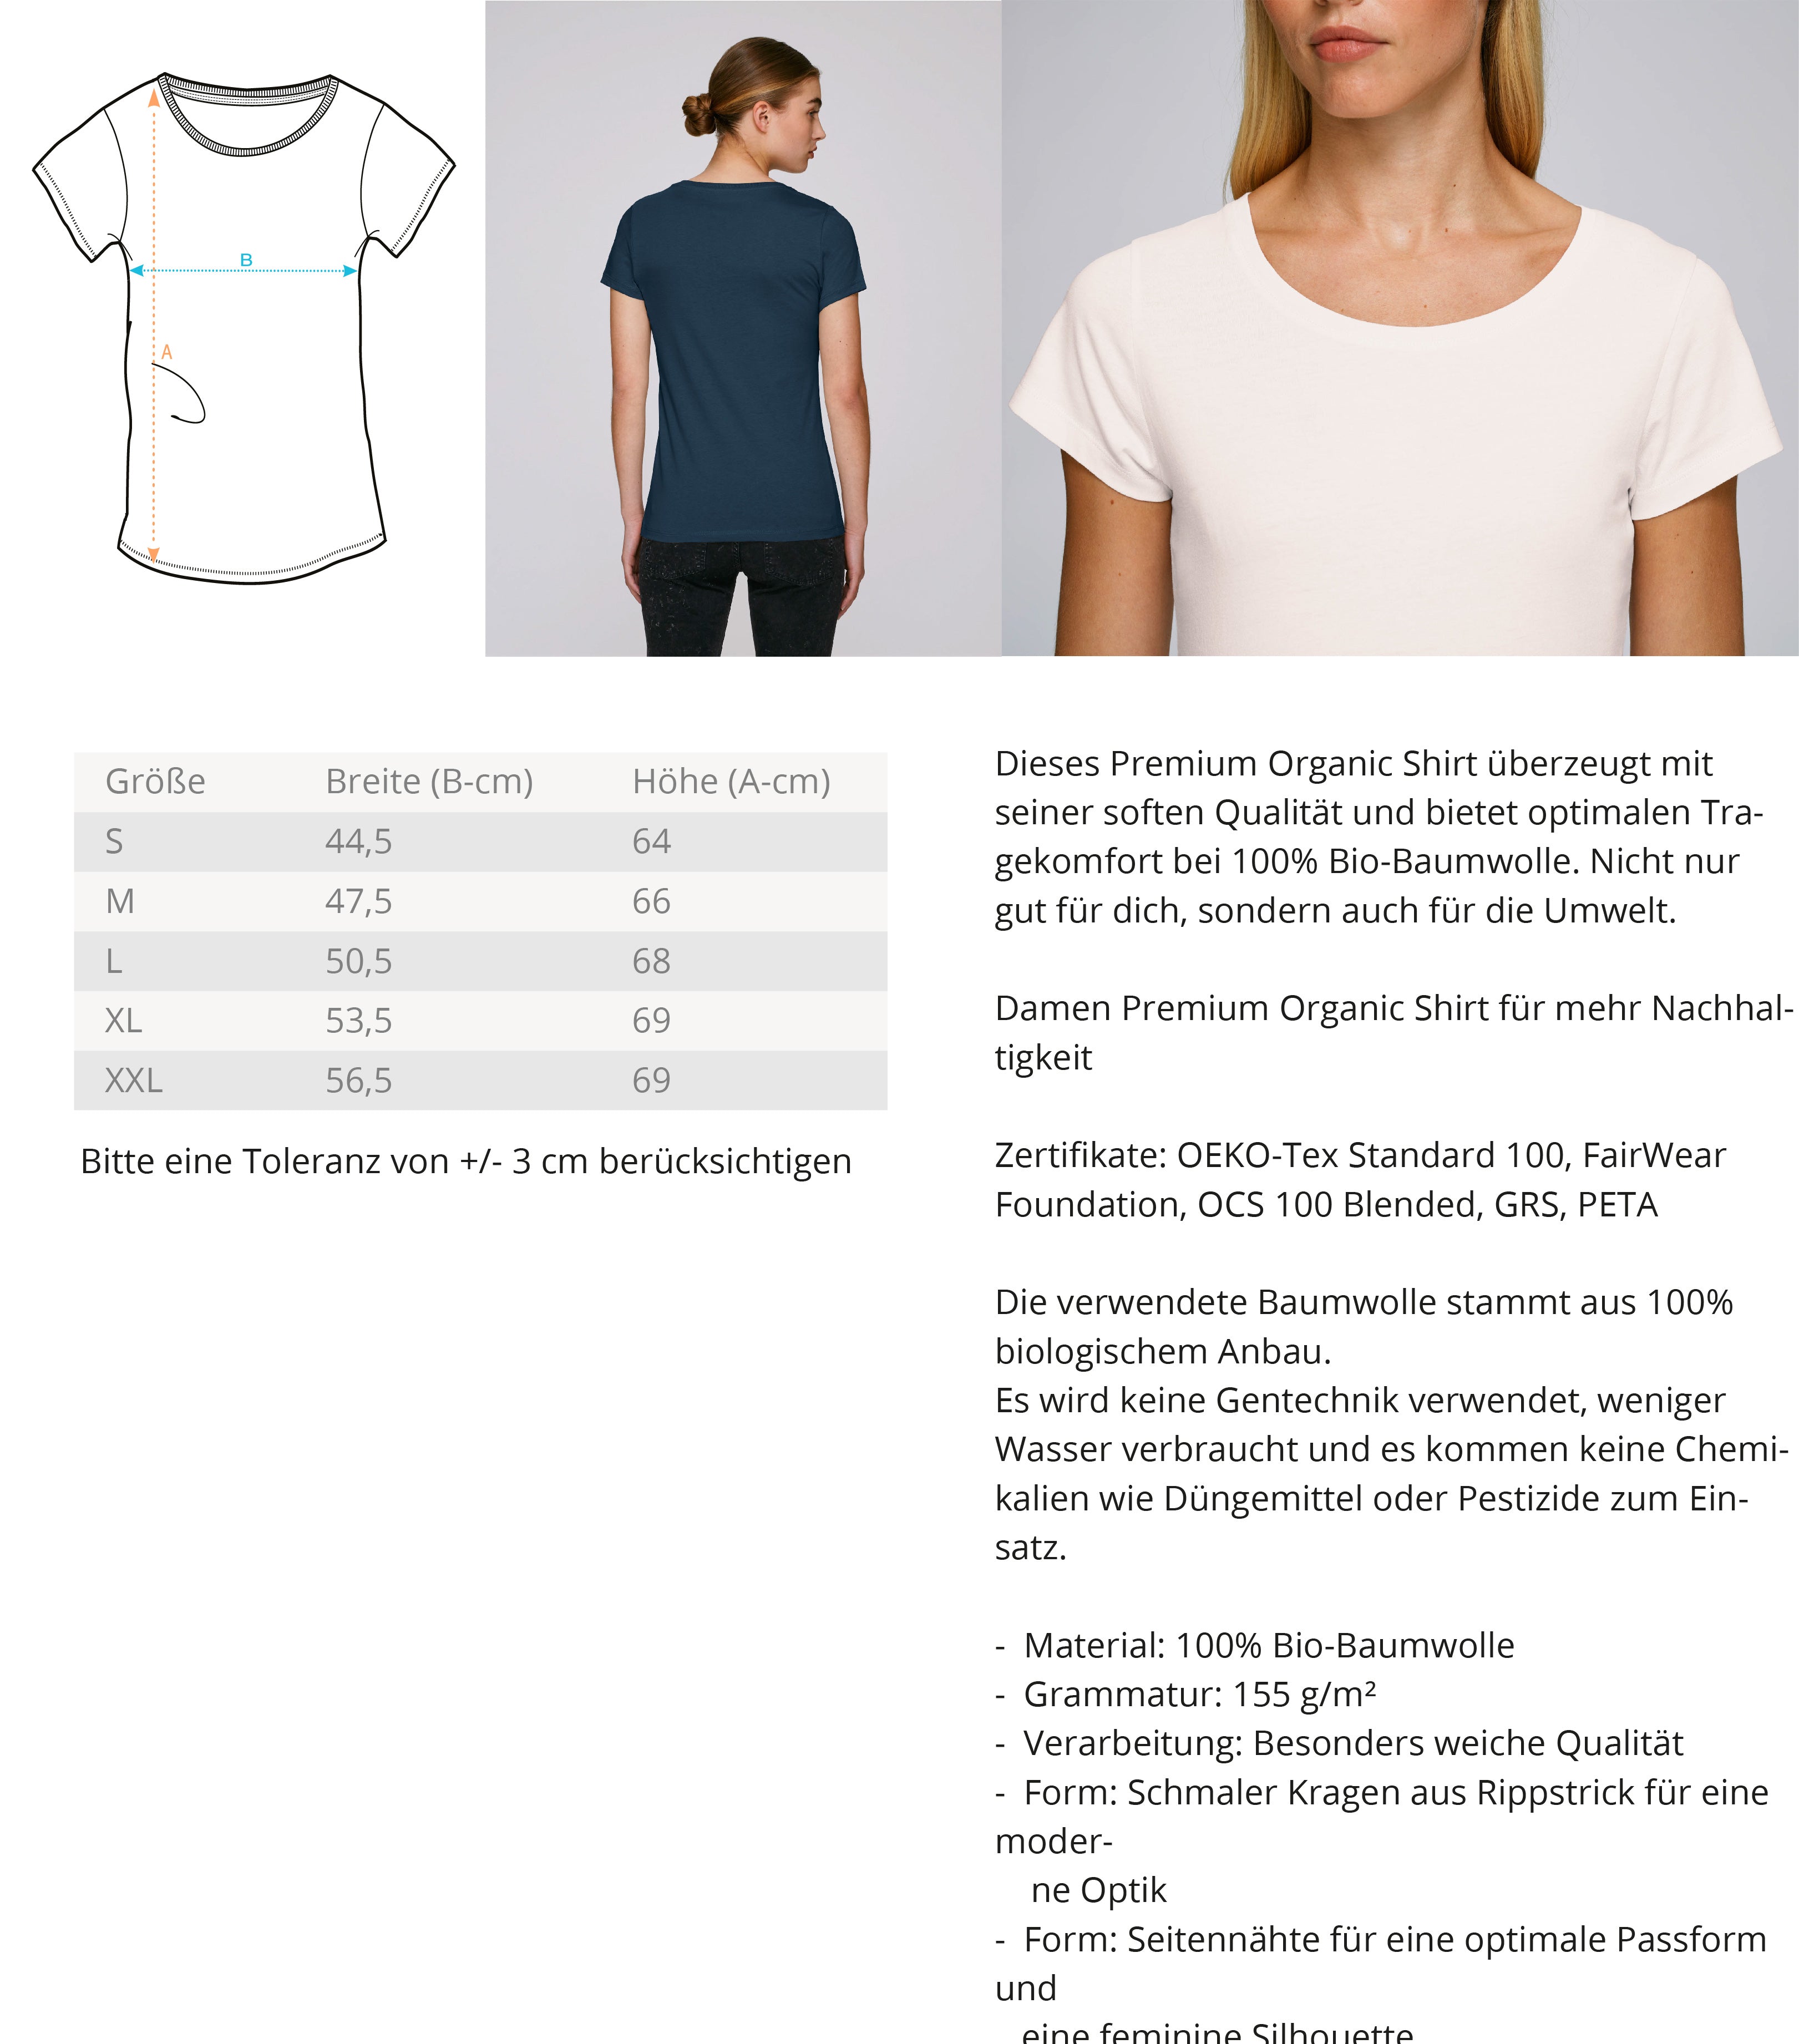 Kecke Füchsin  - Damen Premium Organic Shirt